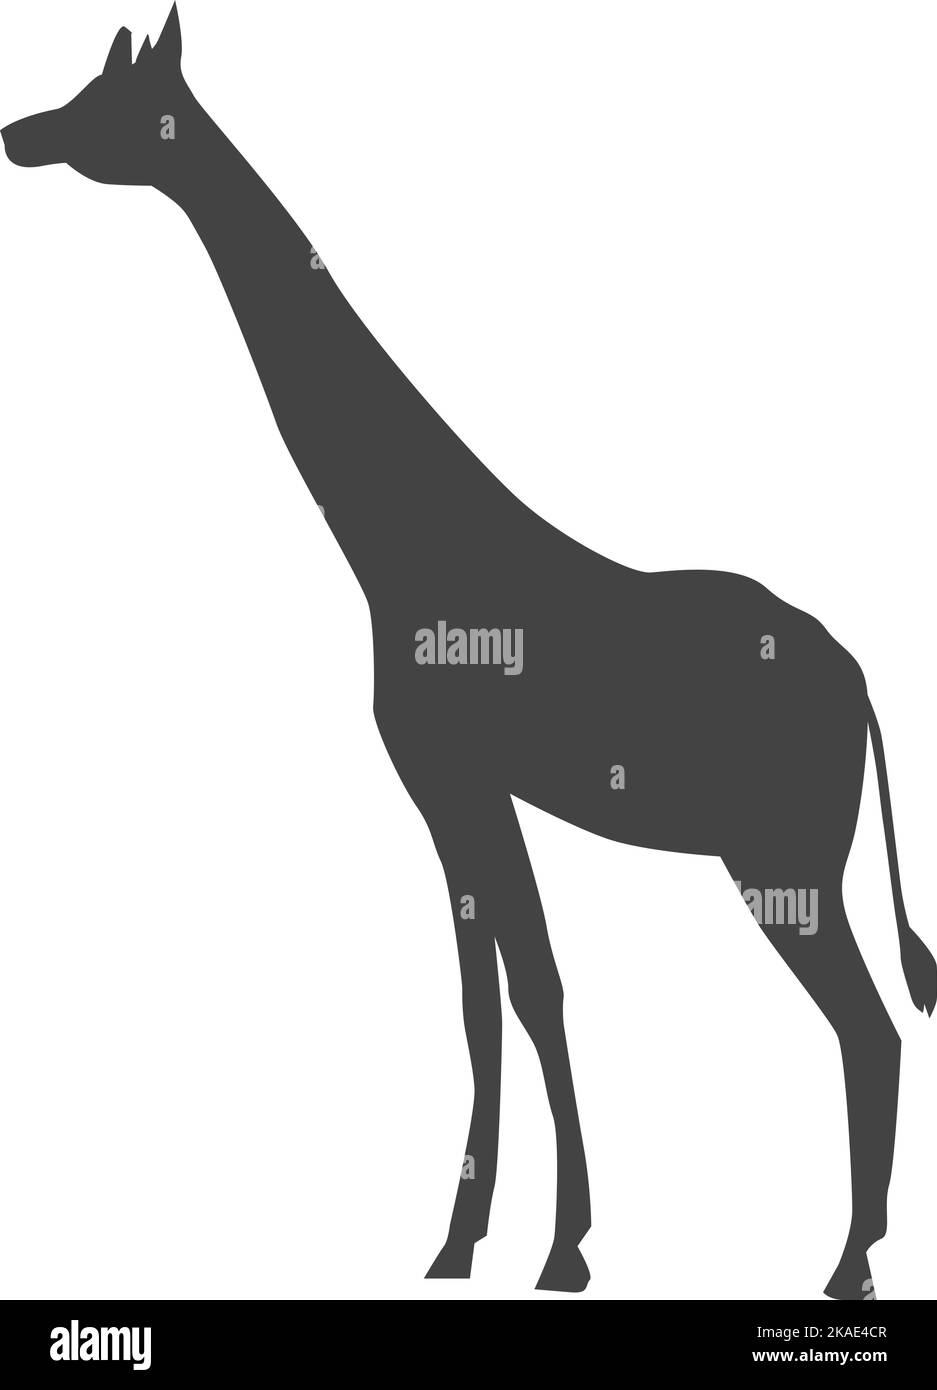 Giraffe black silhouette. Safari animal symbol. Zoo icon Stock Vector